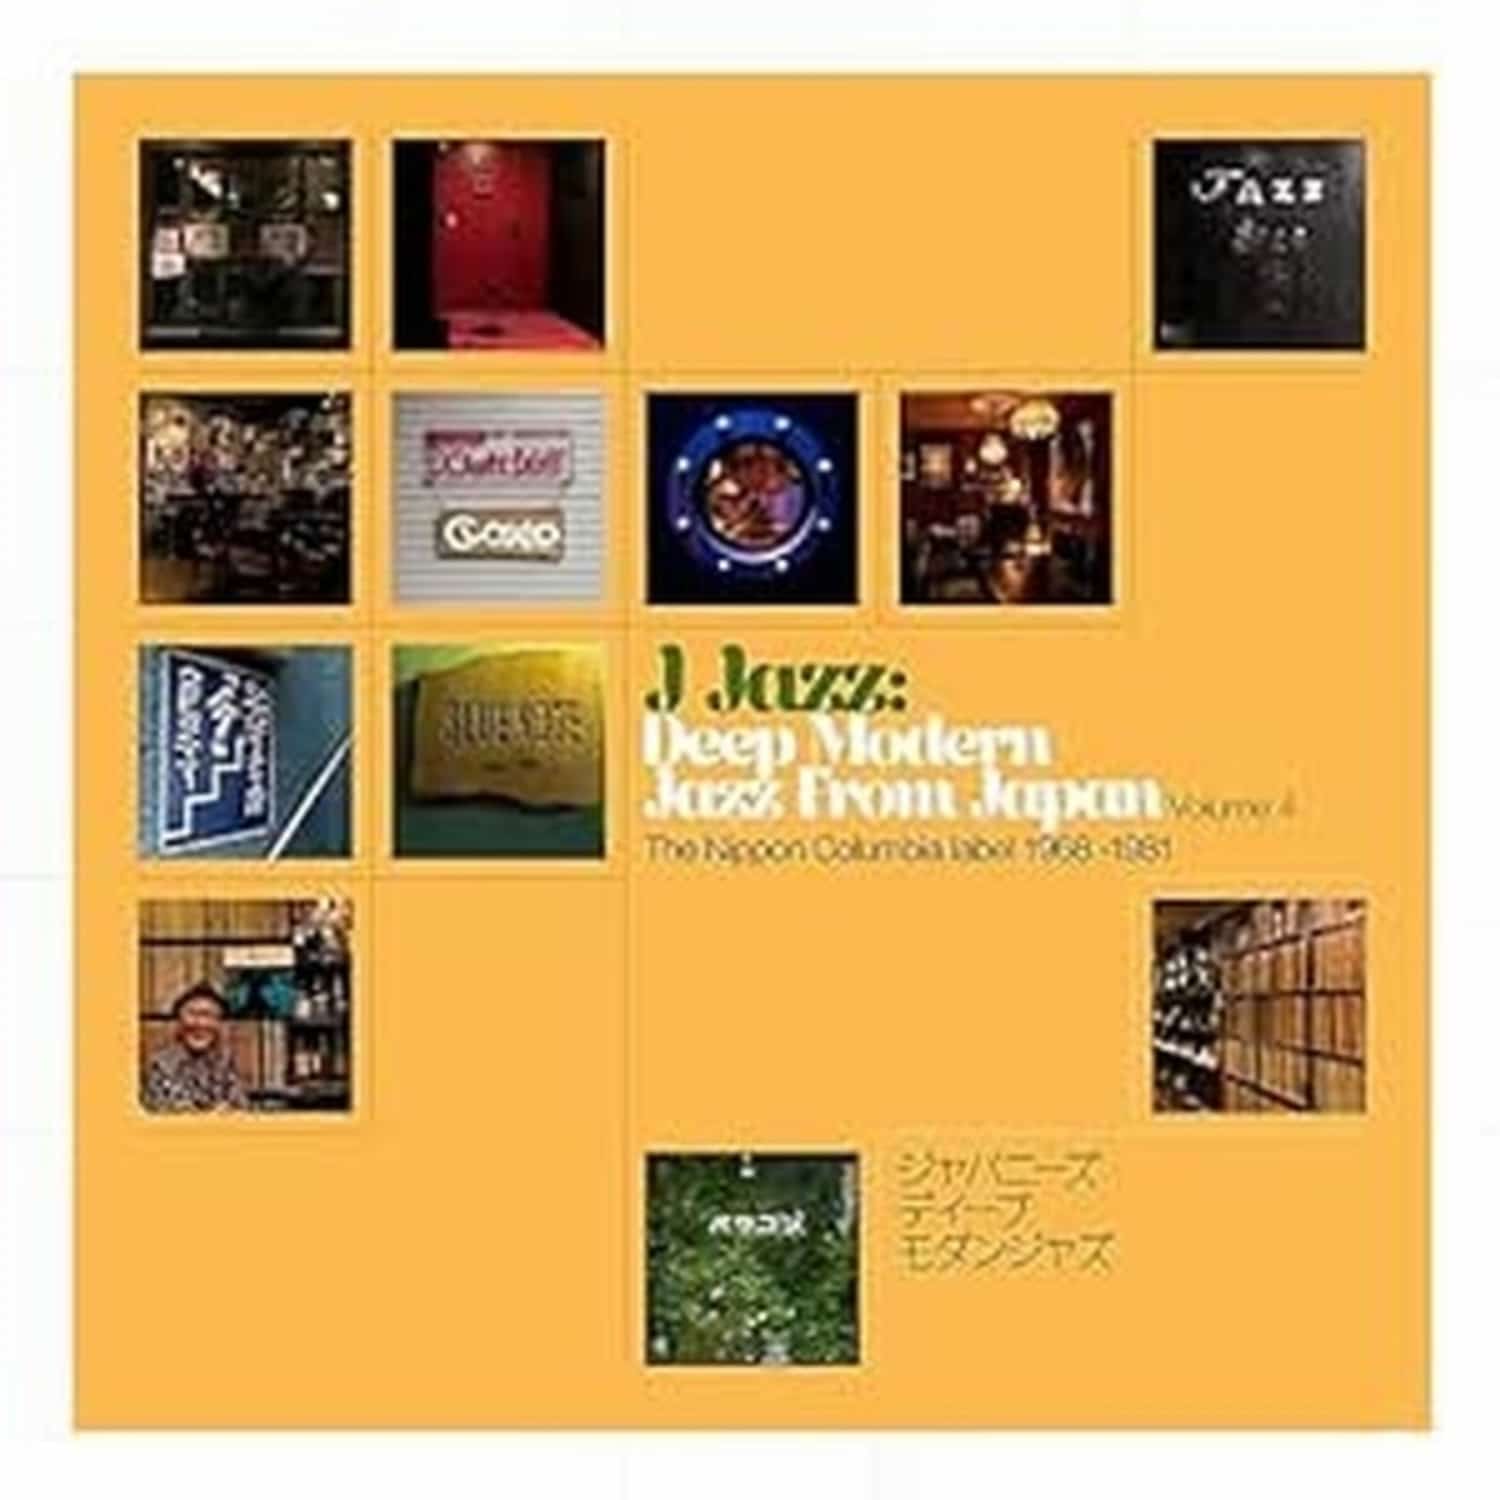 various artists - J JAZZ VOL. 4: DEEP MODERN JAZZ FROM JAPAN - THE N 